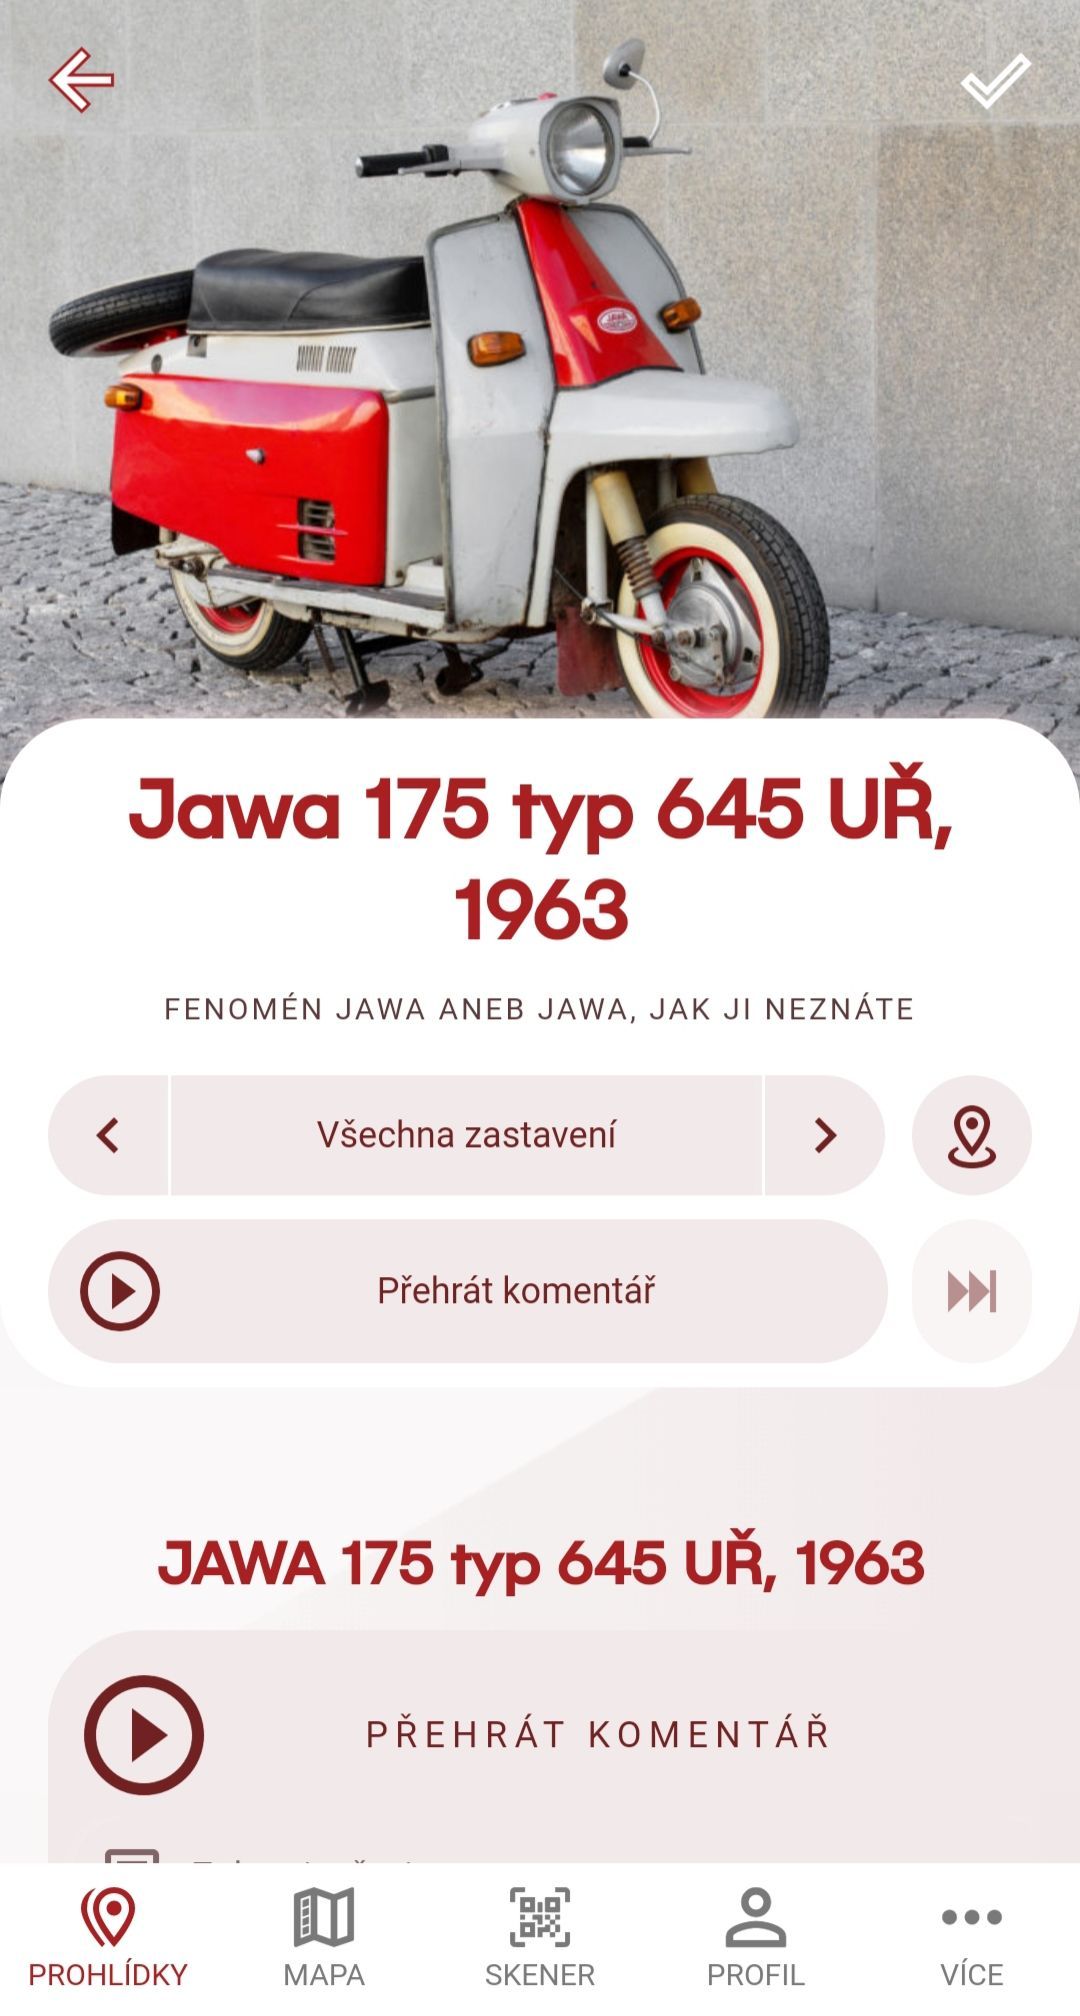 Fenomén Jawa v aplikaci